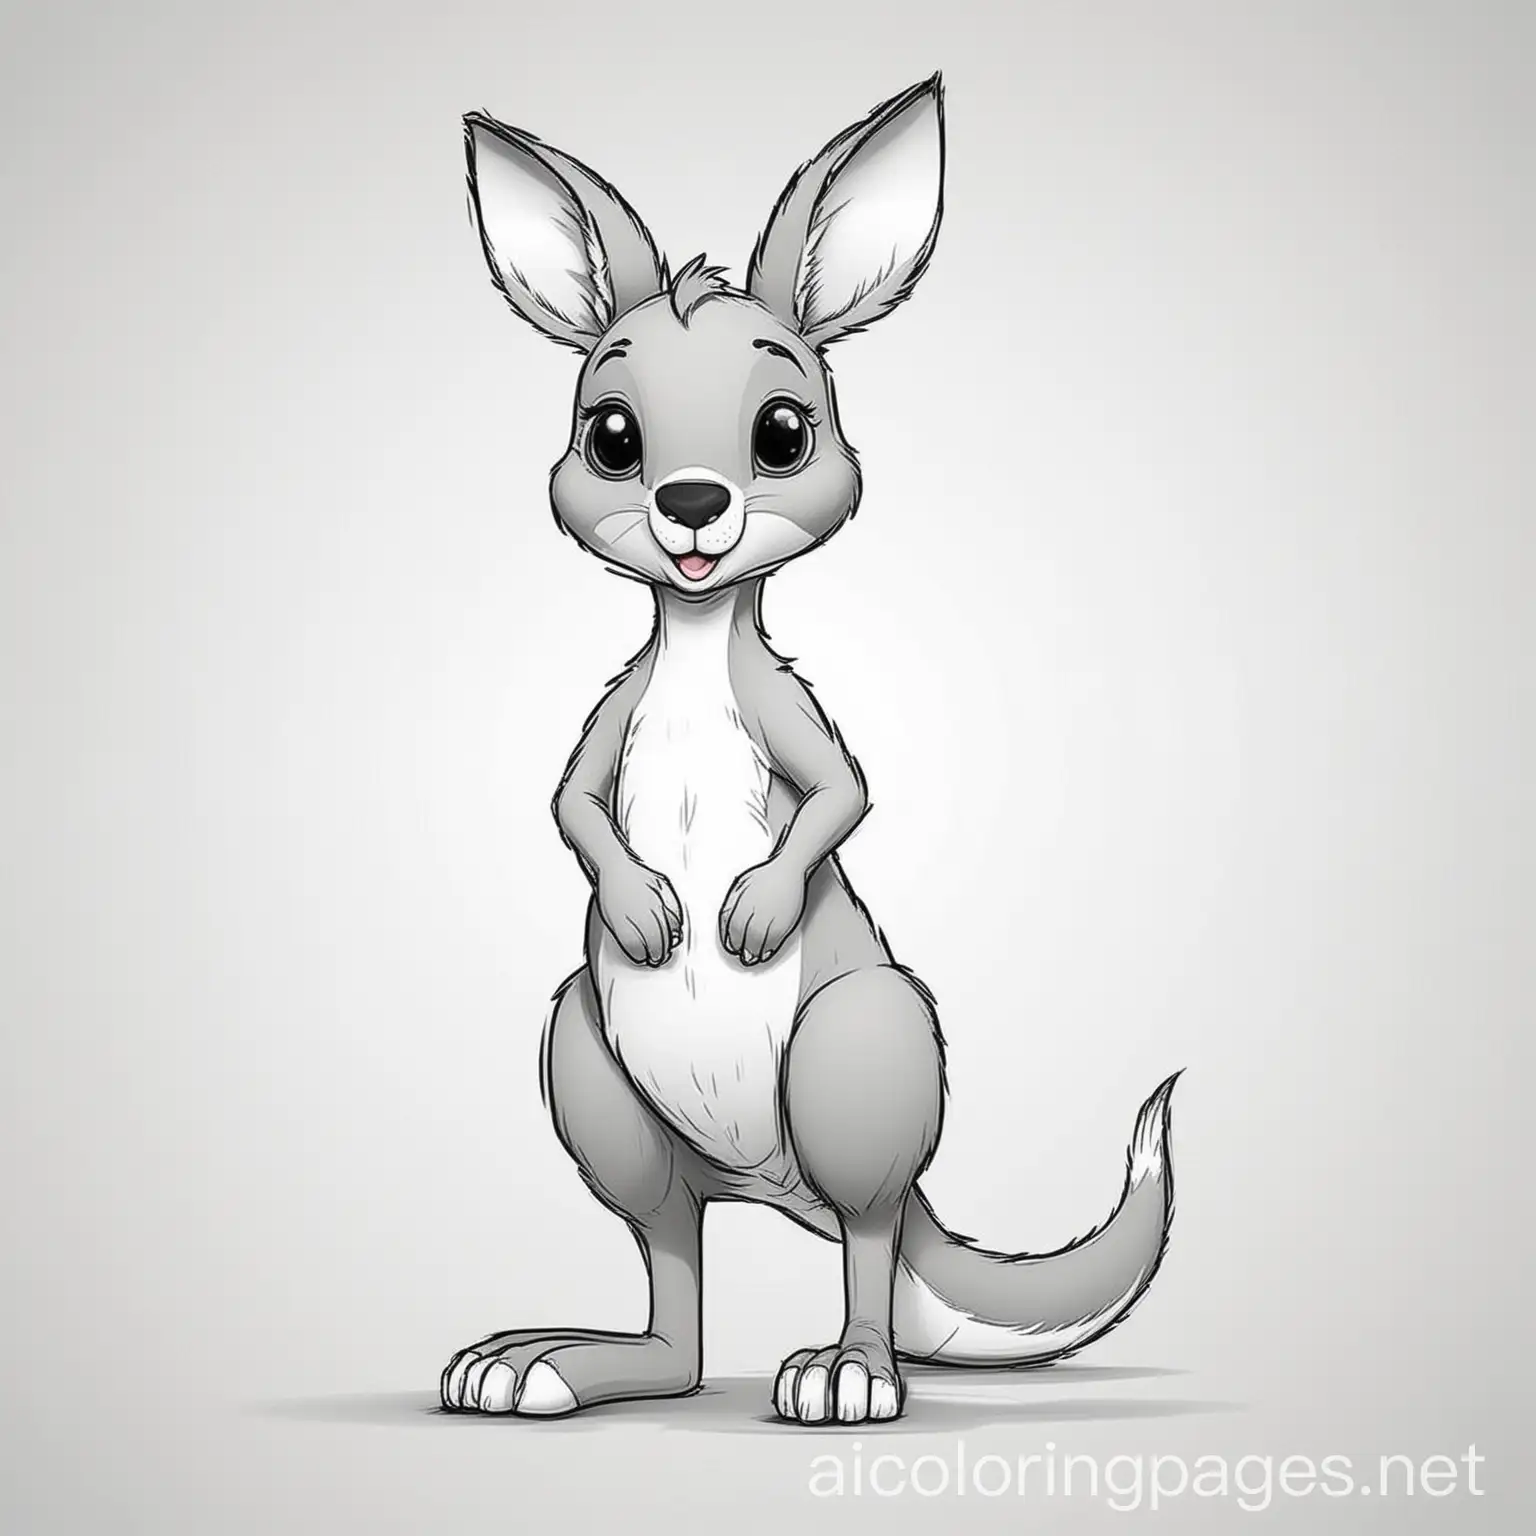 Cartoon-Kangaroo-Coloring-Page-Happy-Funny-Cute-Kangaroo-for-Kids